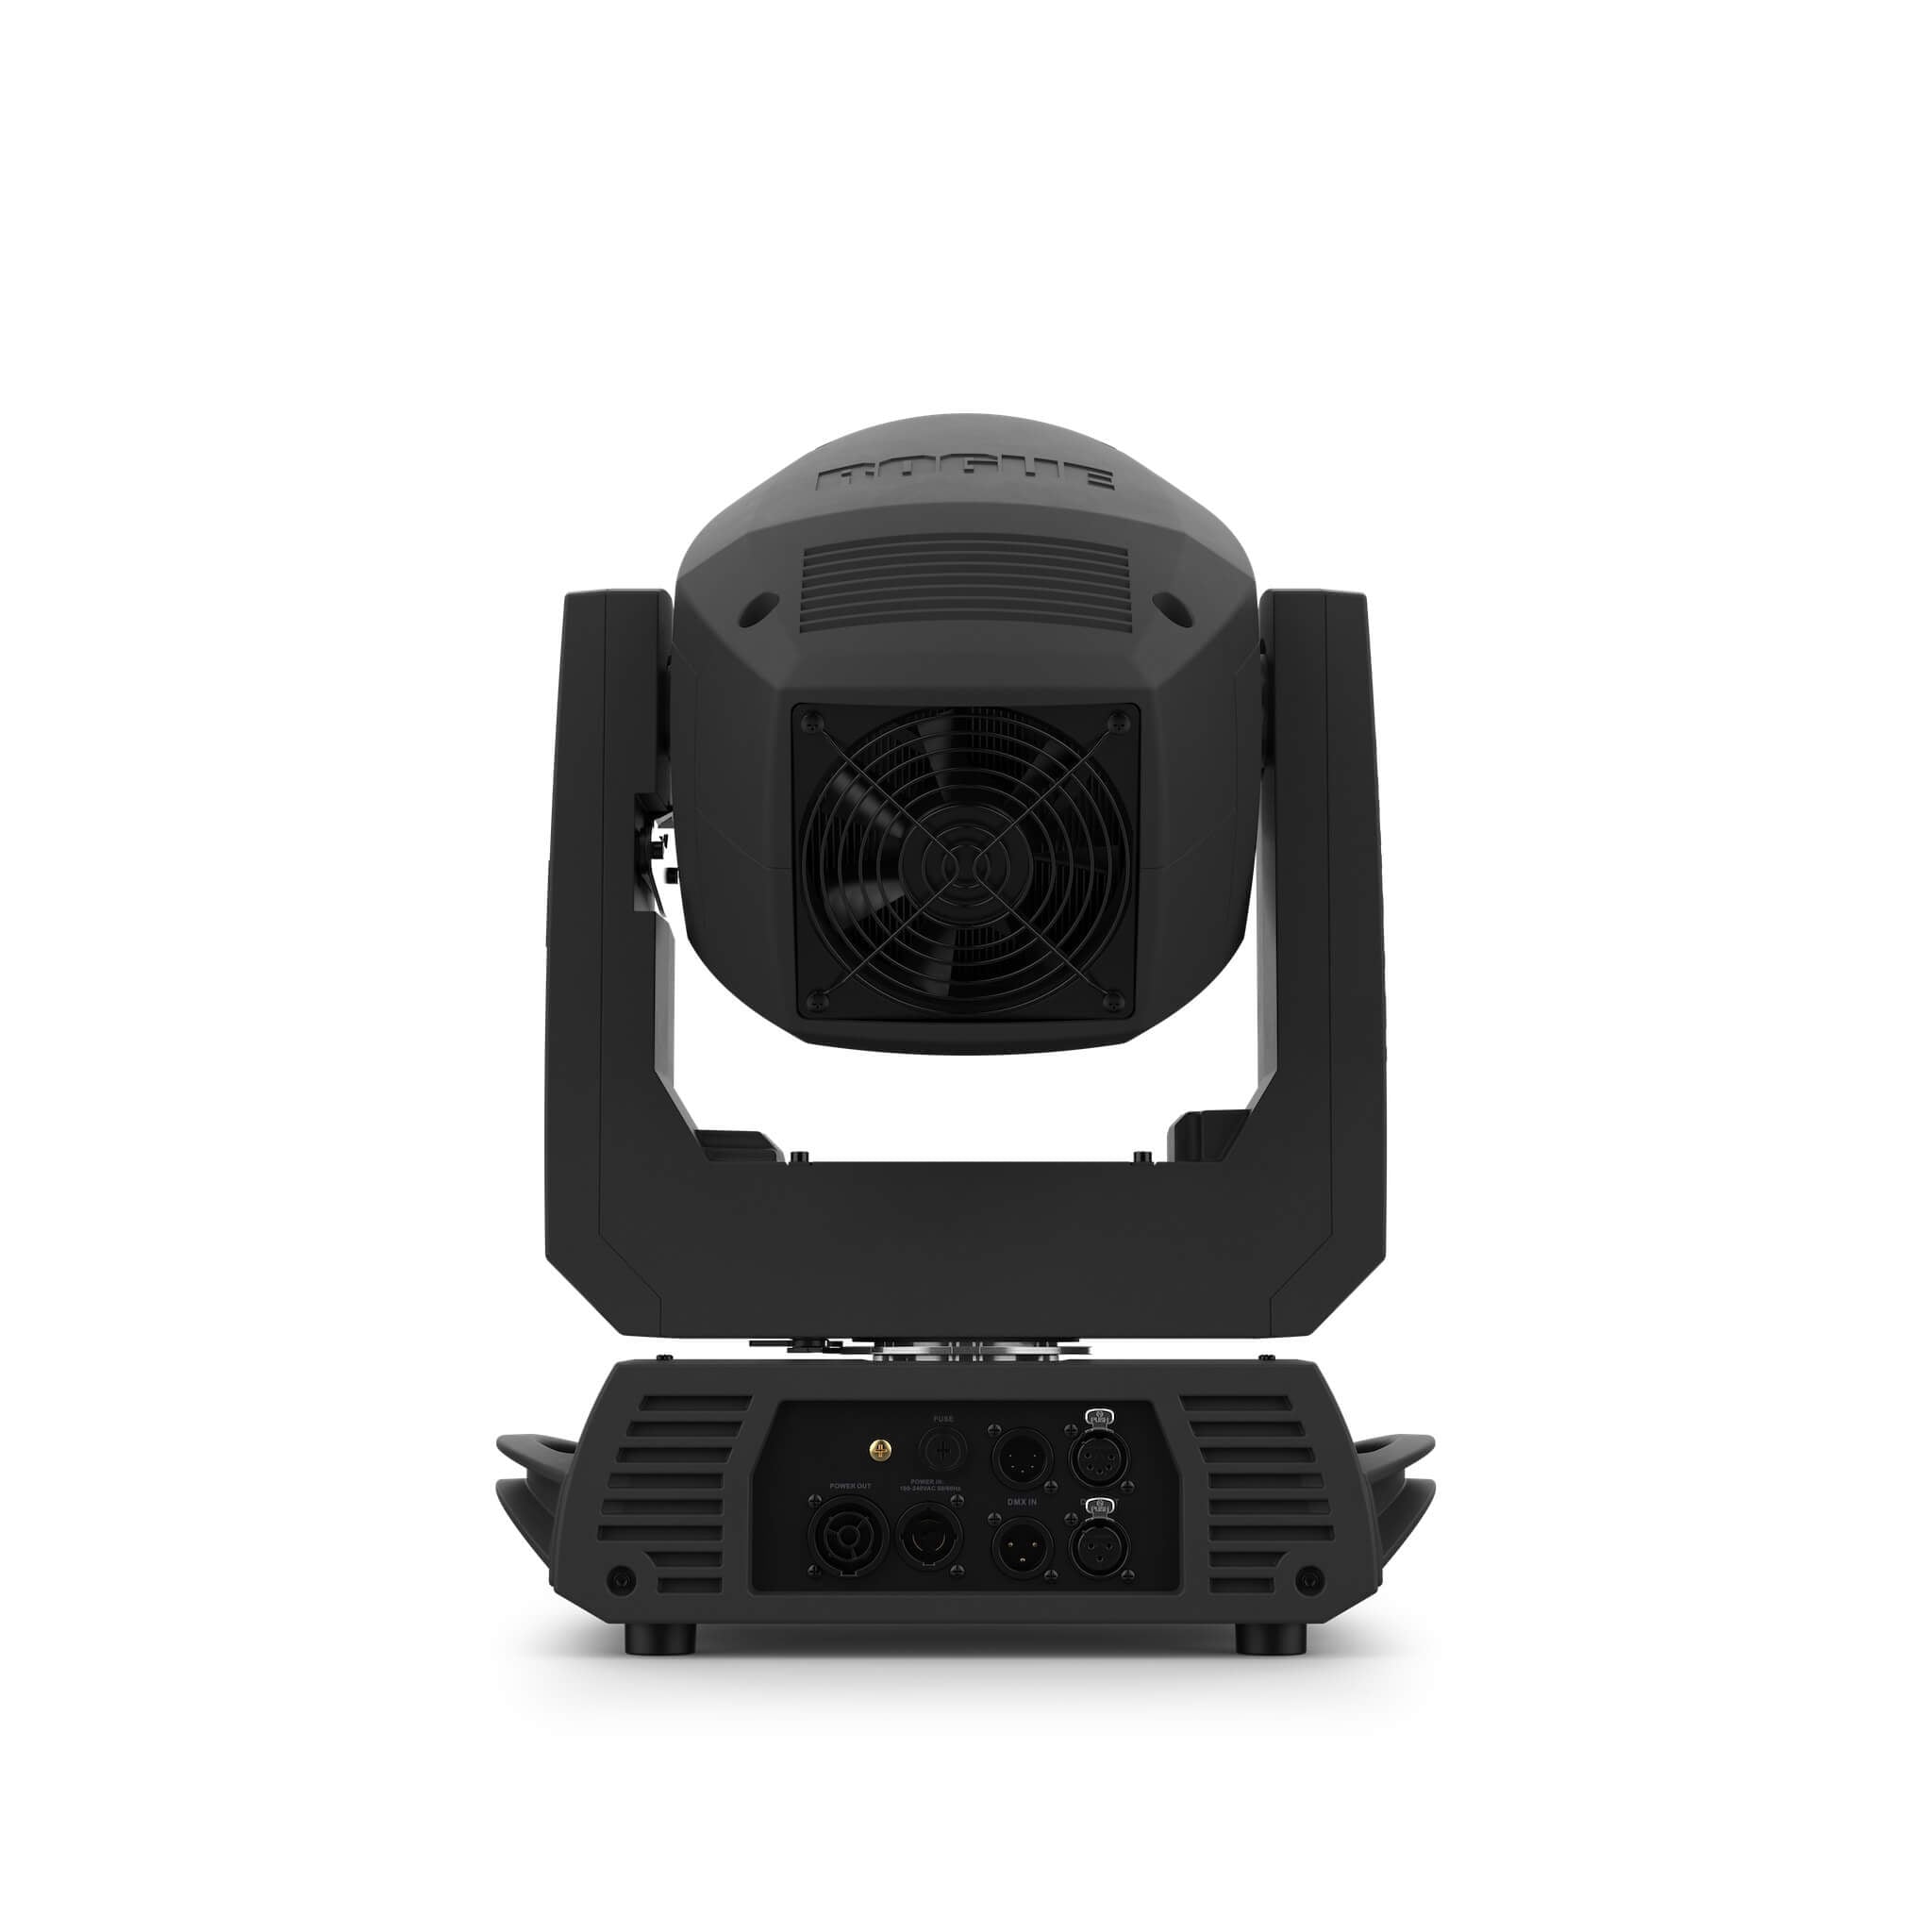 Chauvet Professional Rogue R2E Spot - 350W LED Moving Head Fixture, back